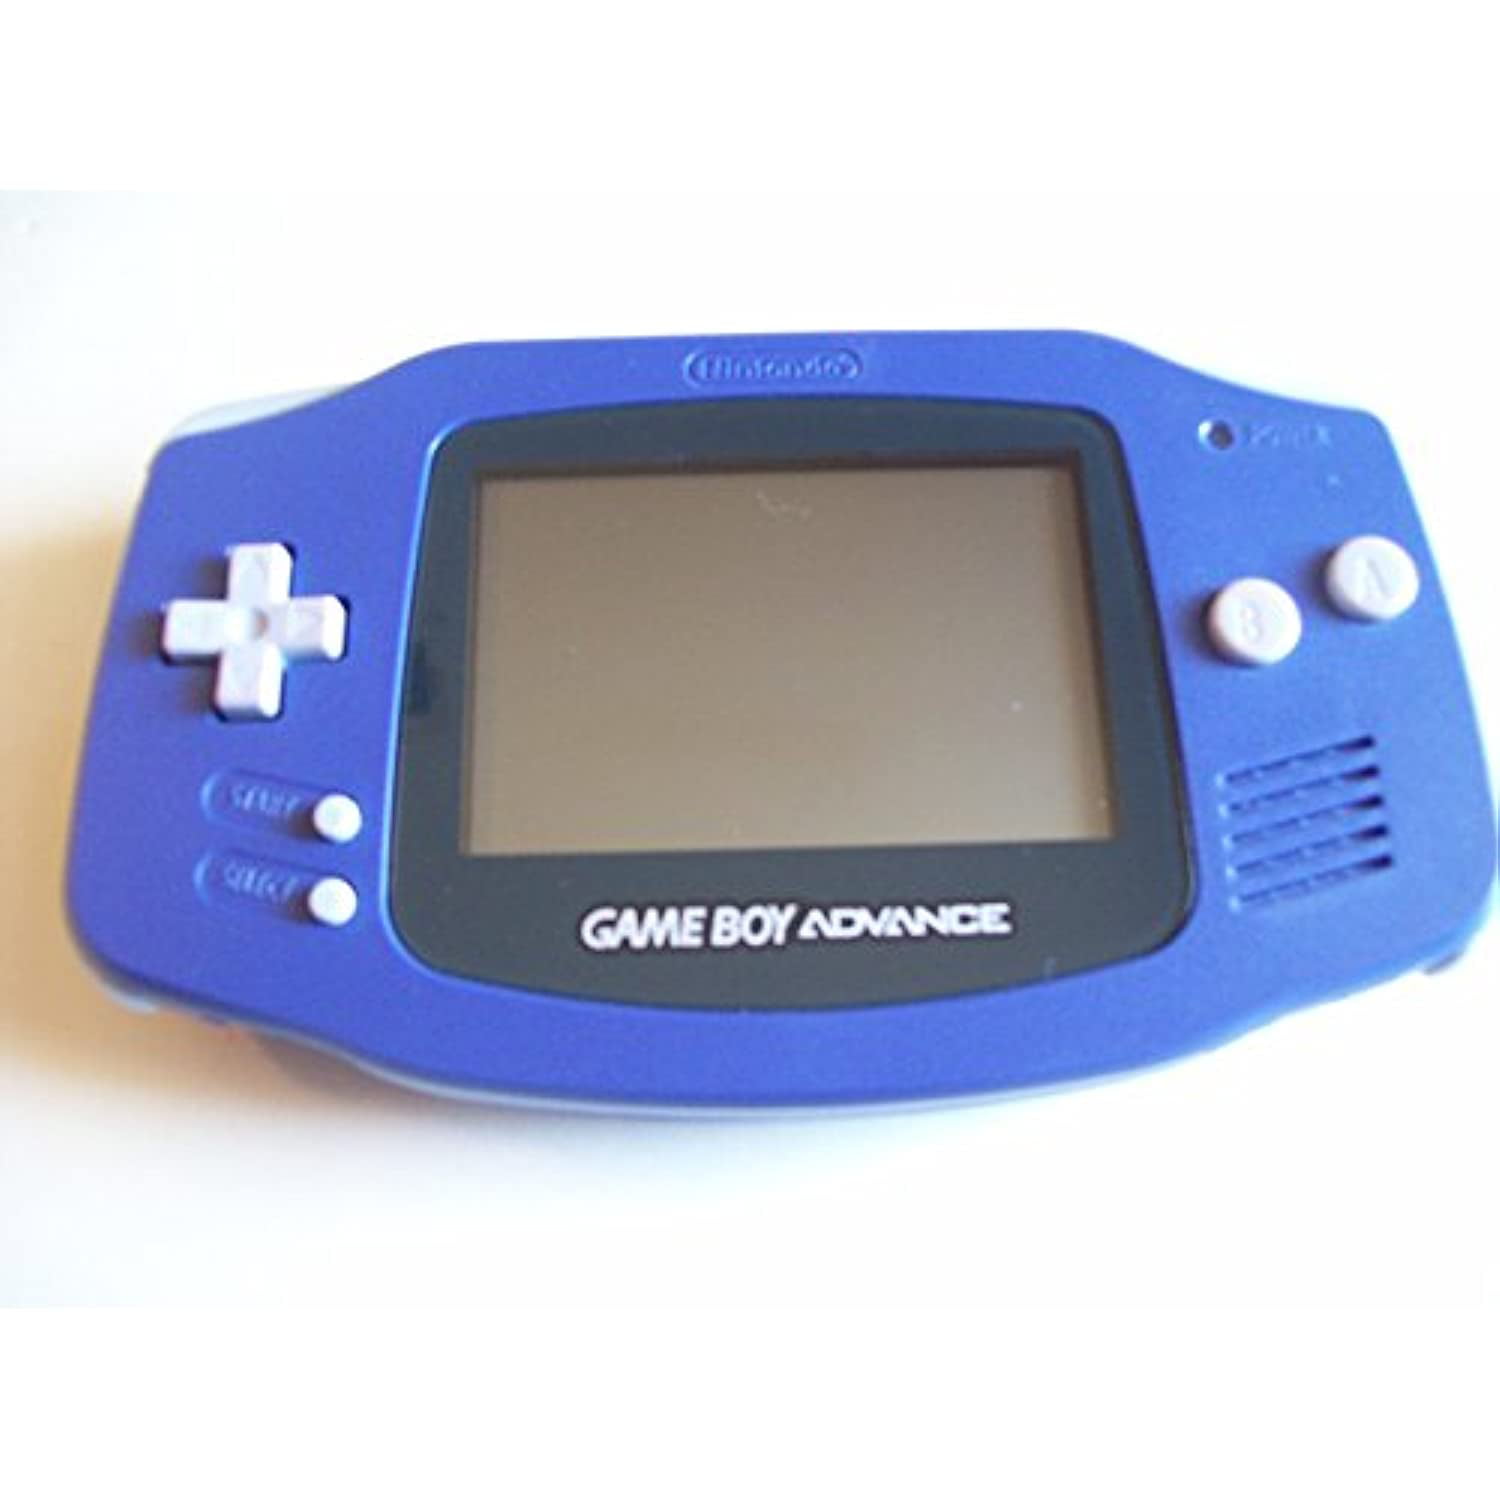 tyktflydende At give tilladelse Literacy Game Boy Advance Console - Limited Edition - Cobalt Blue - Walmart.com